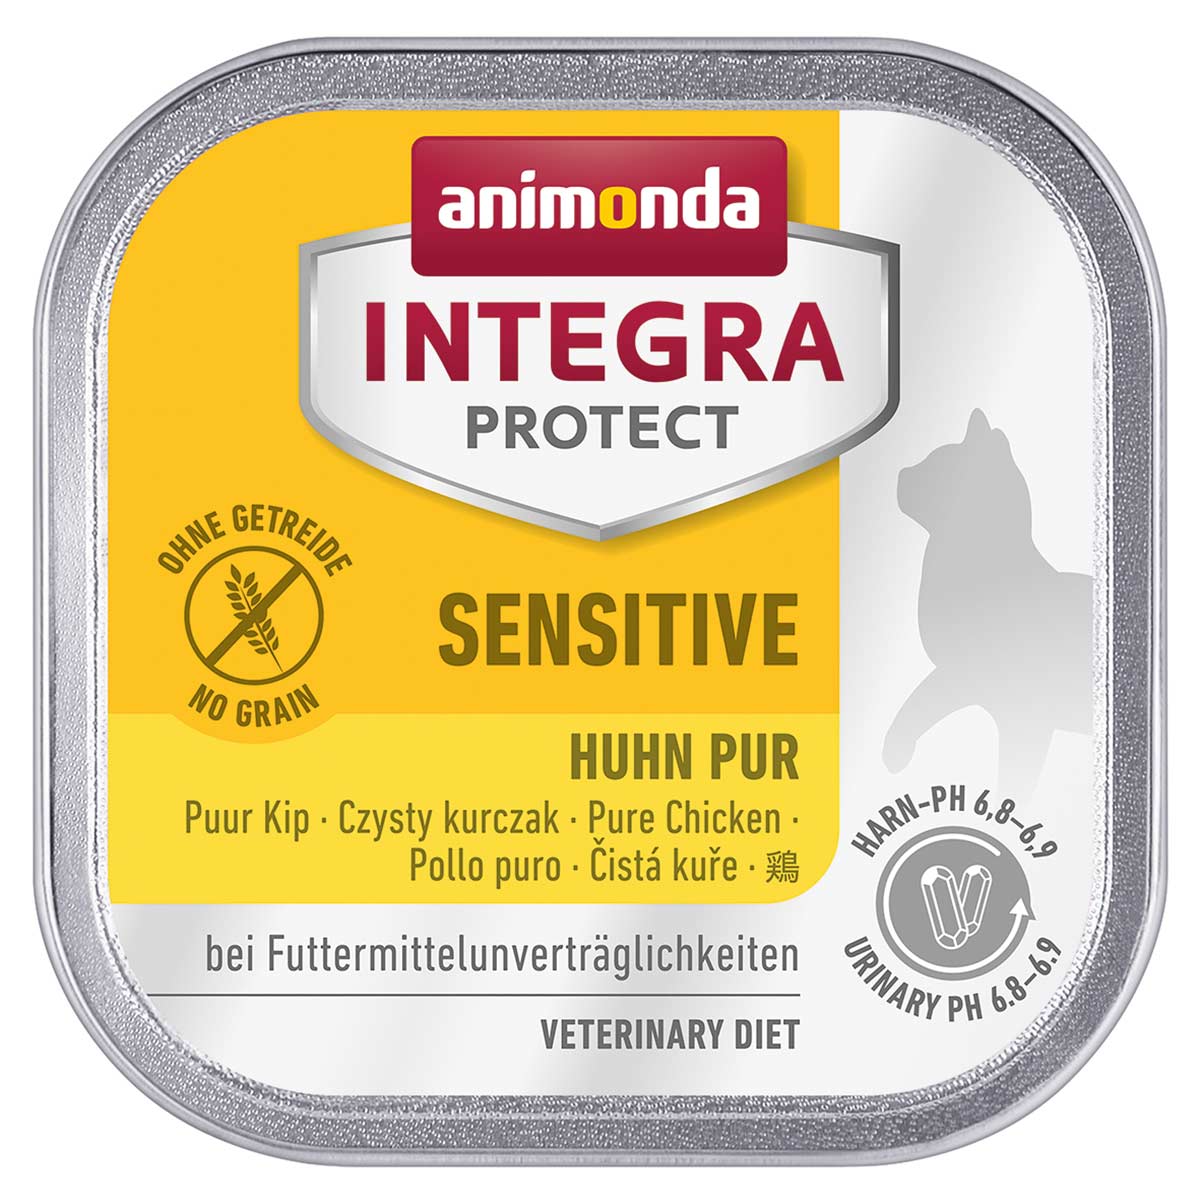 Animonda Integra Protect Sensitive čisté kuře 16x100g